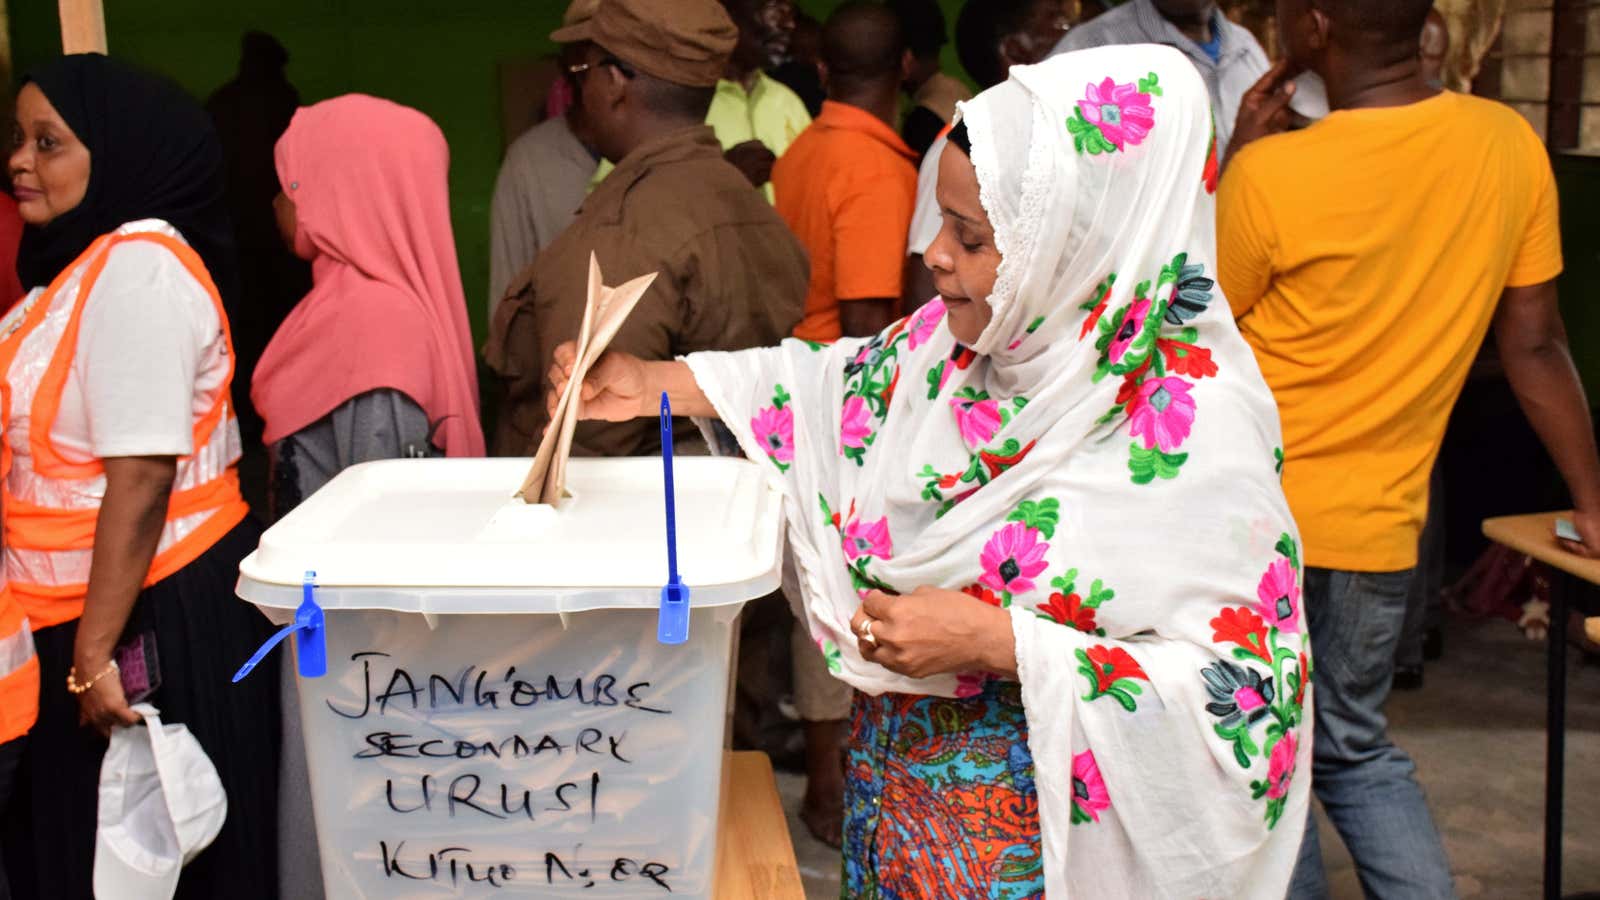 Early voting on the semi-autonomous island of Zanzibar, Tanzania Oct. 27, 2020.